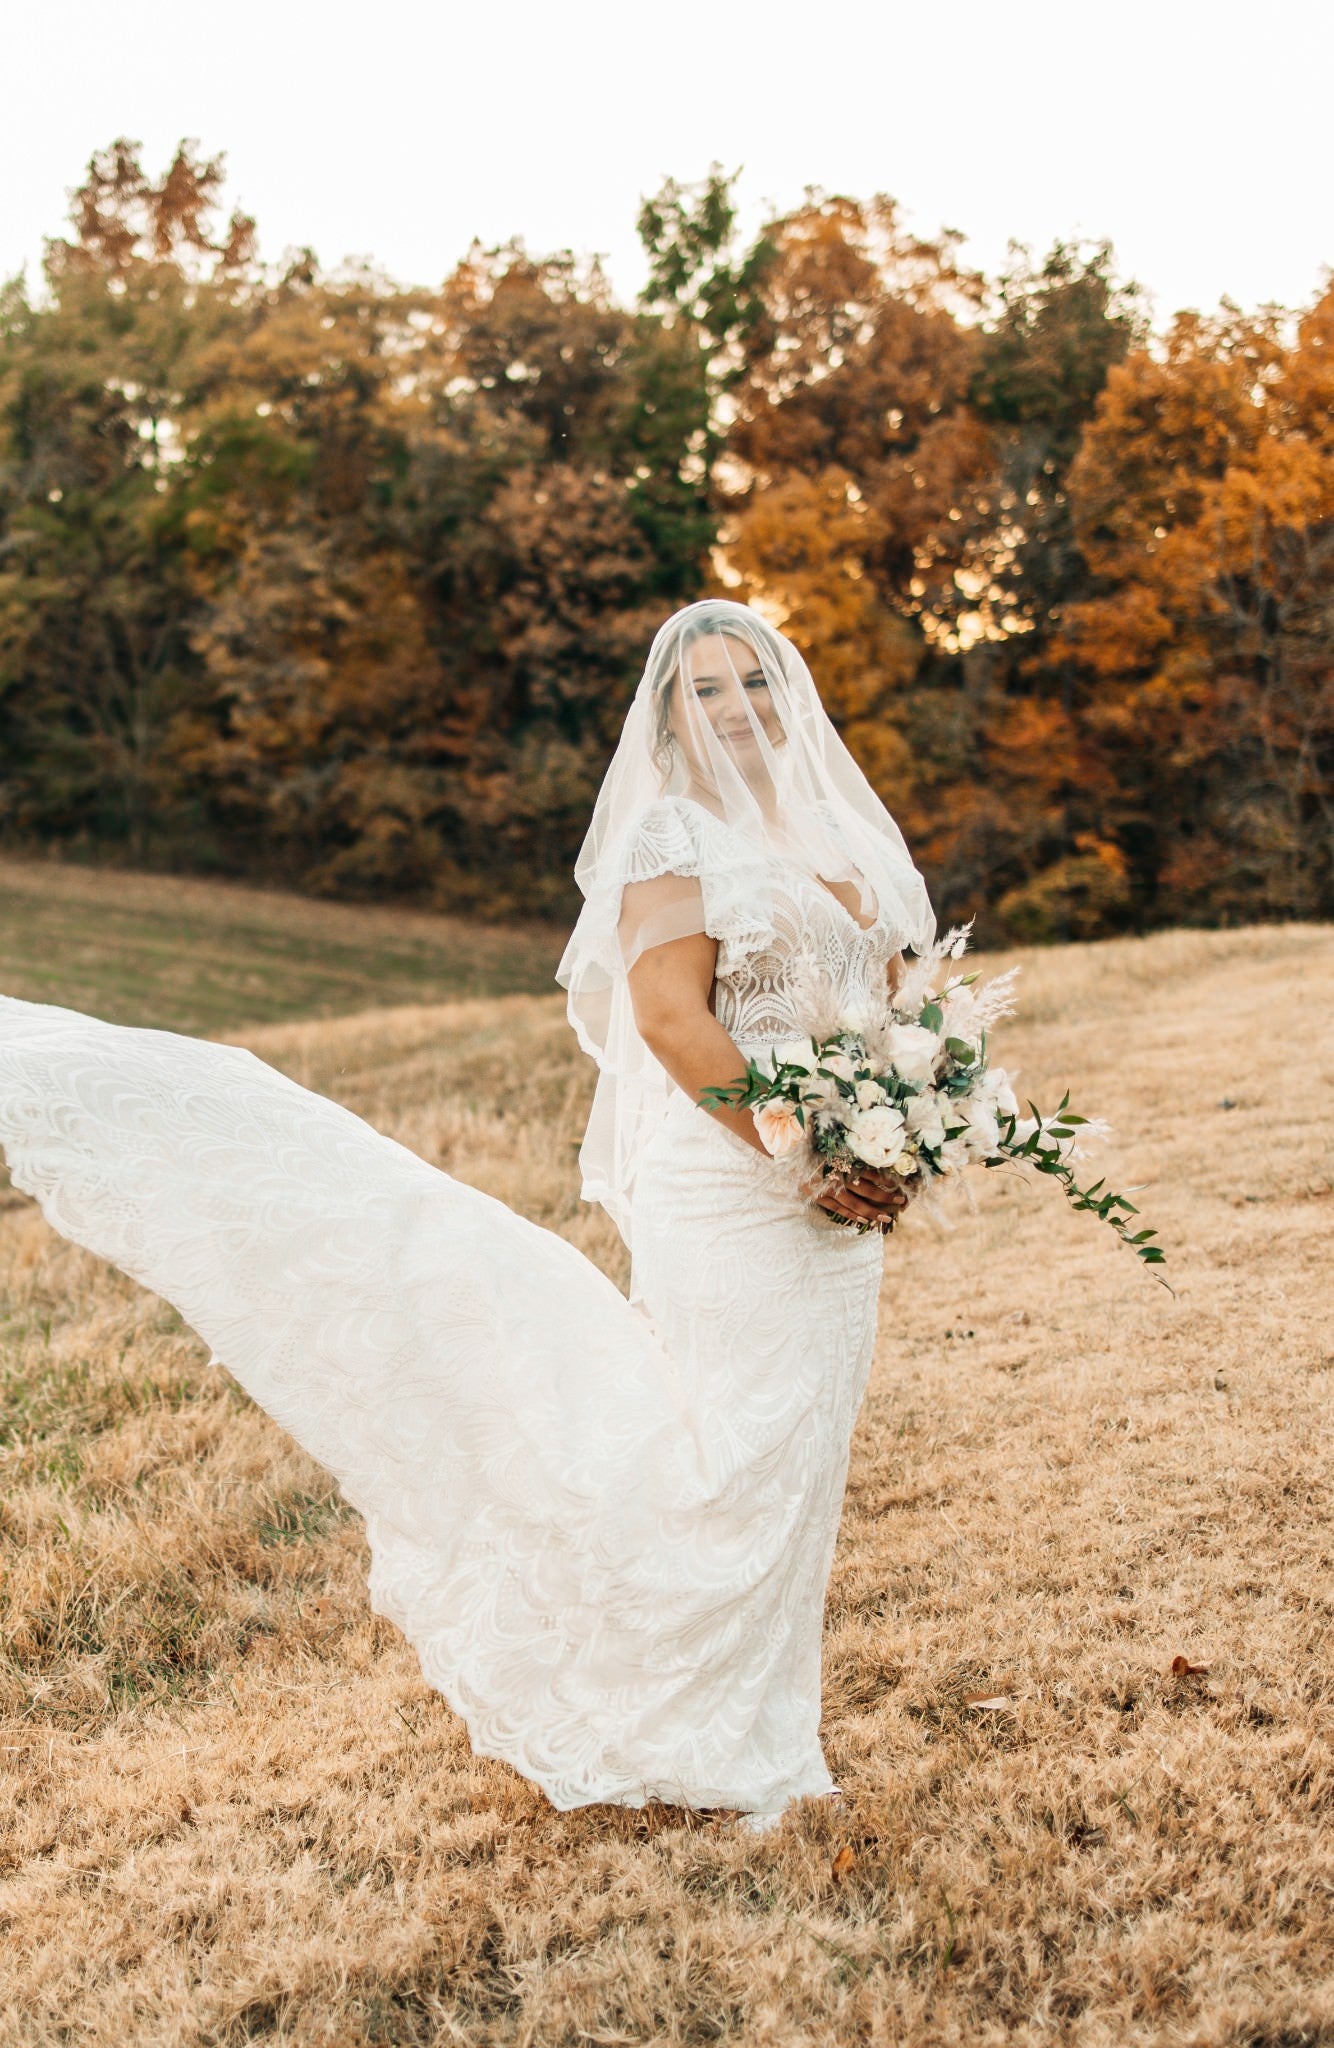 Wedding Veil With Blusher 2 Tier Bridal Veil Soft Wedding 